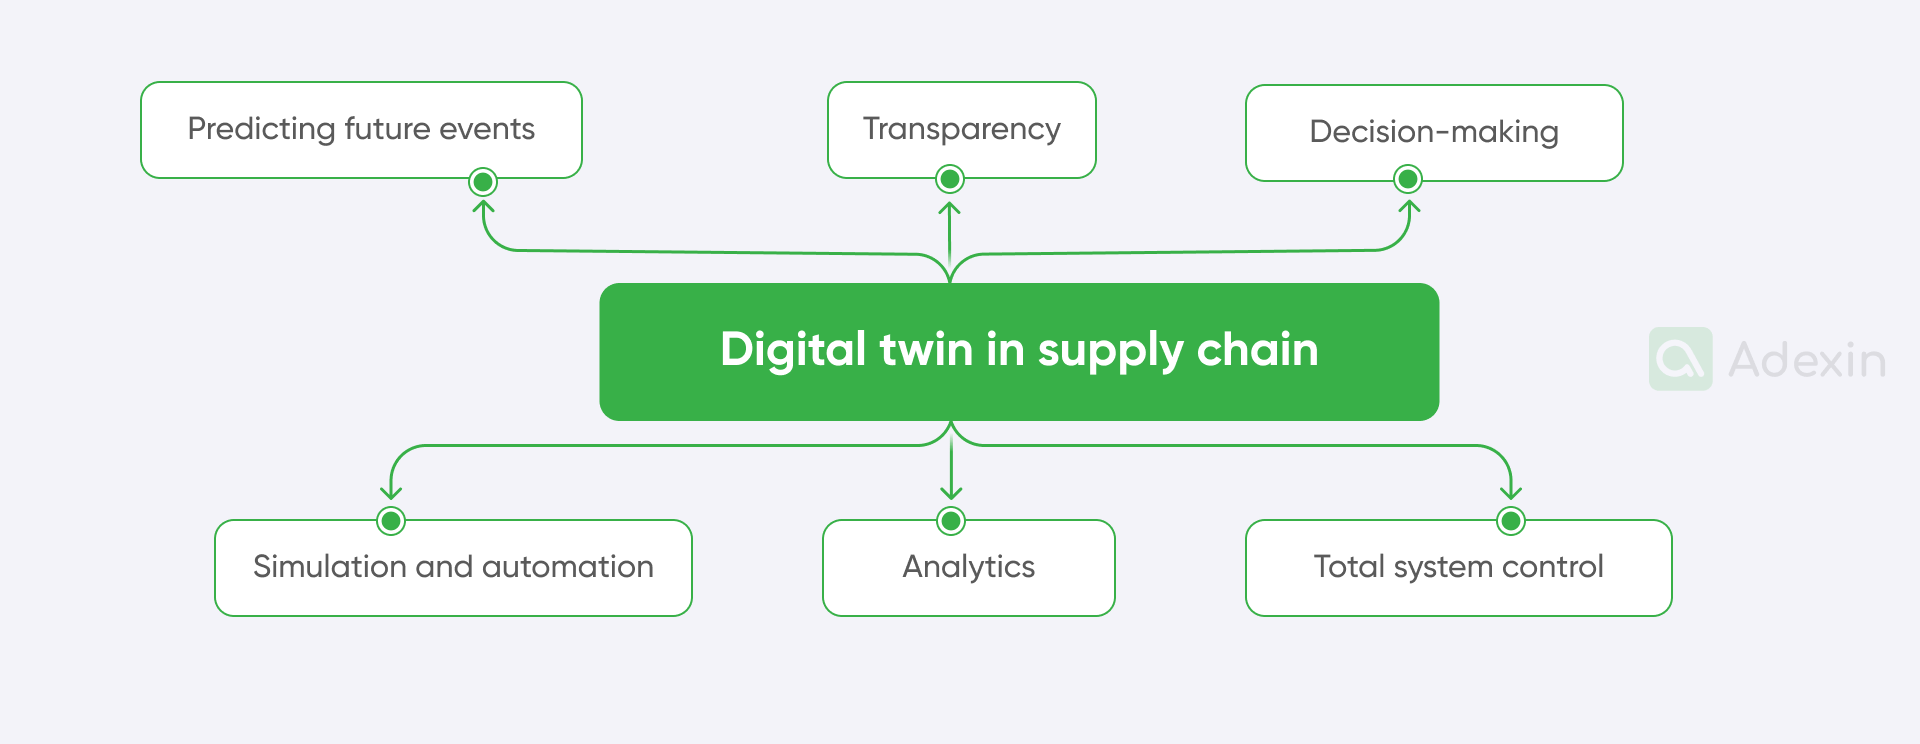 Digital twin in supply chain